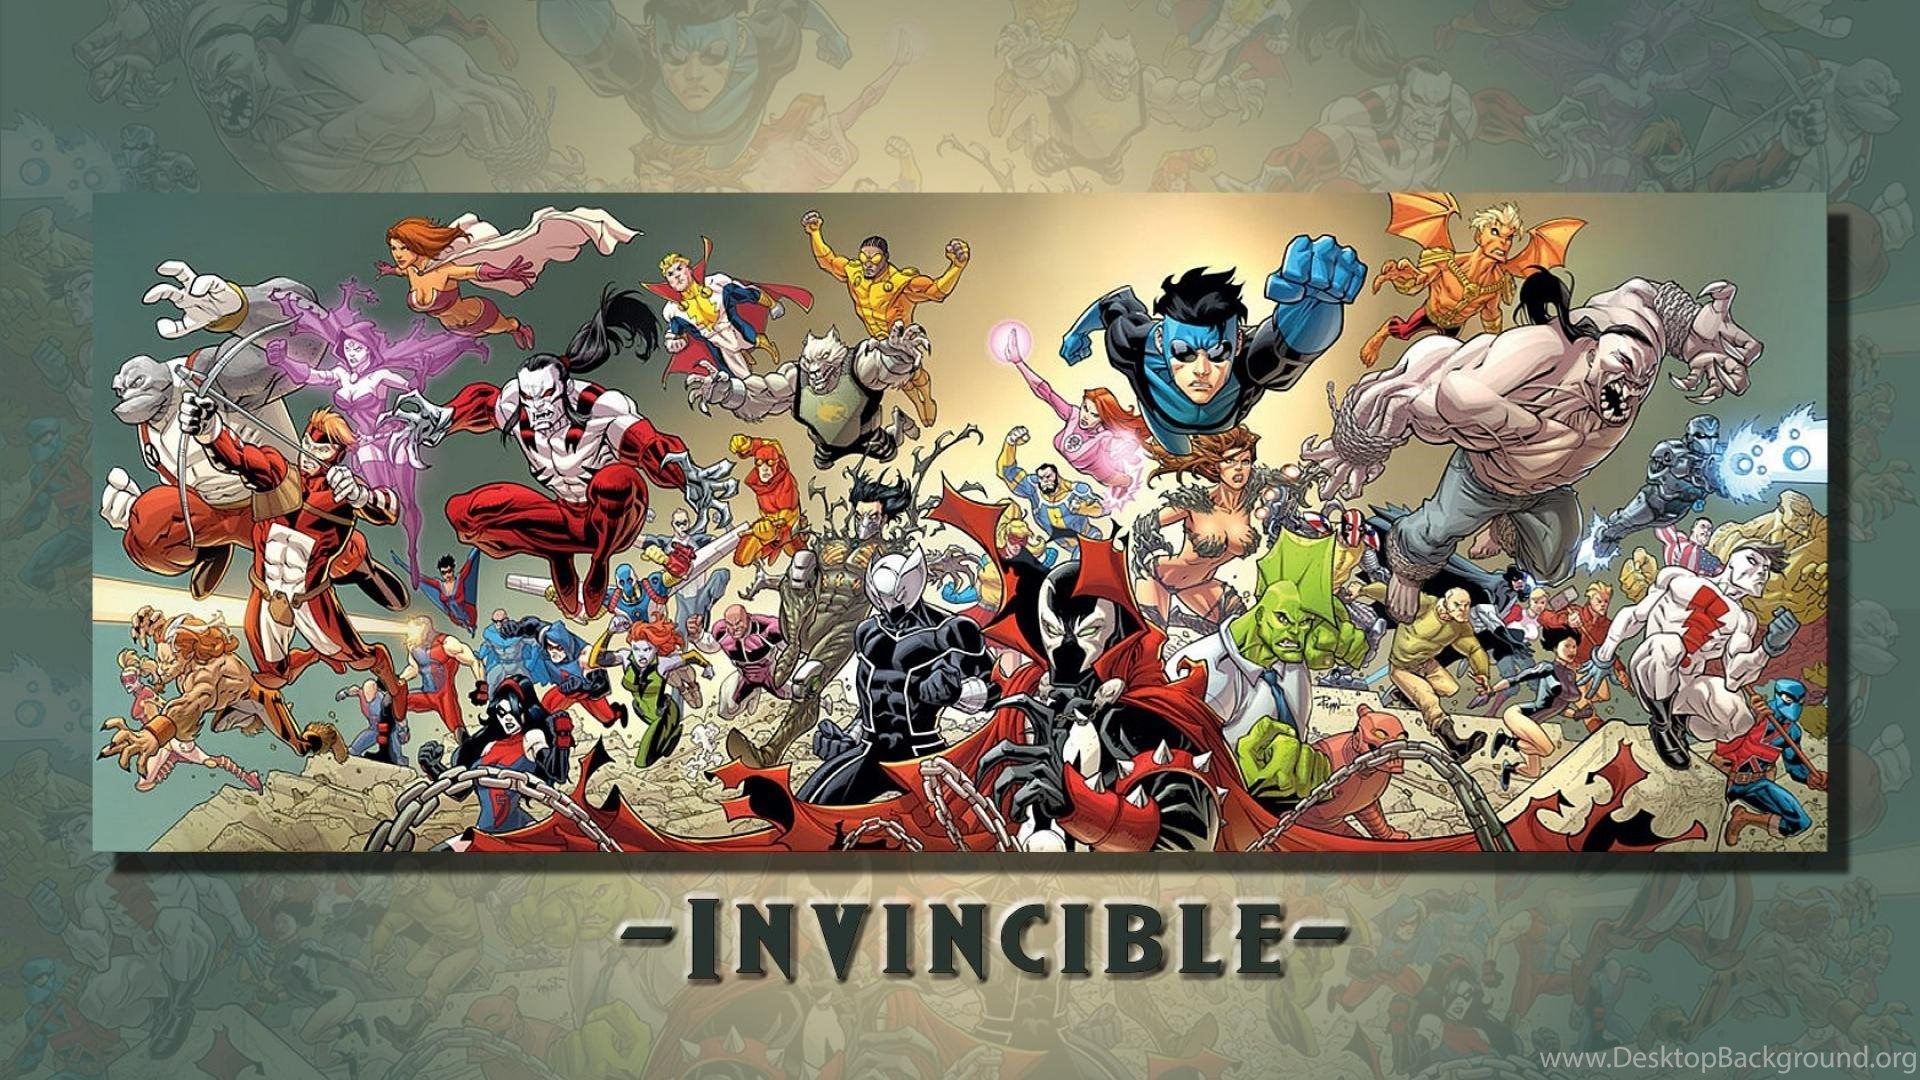 The Invincible Video Game Wallpaper 4K